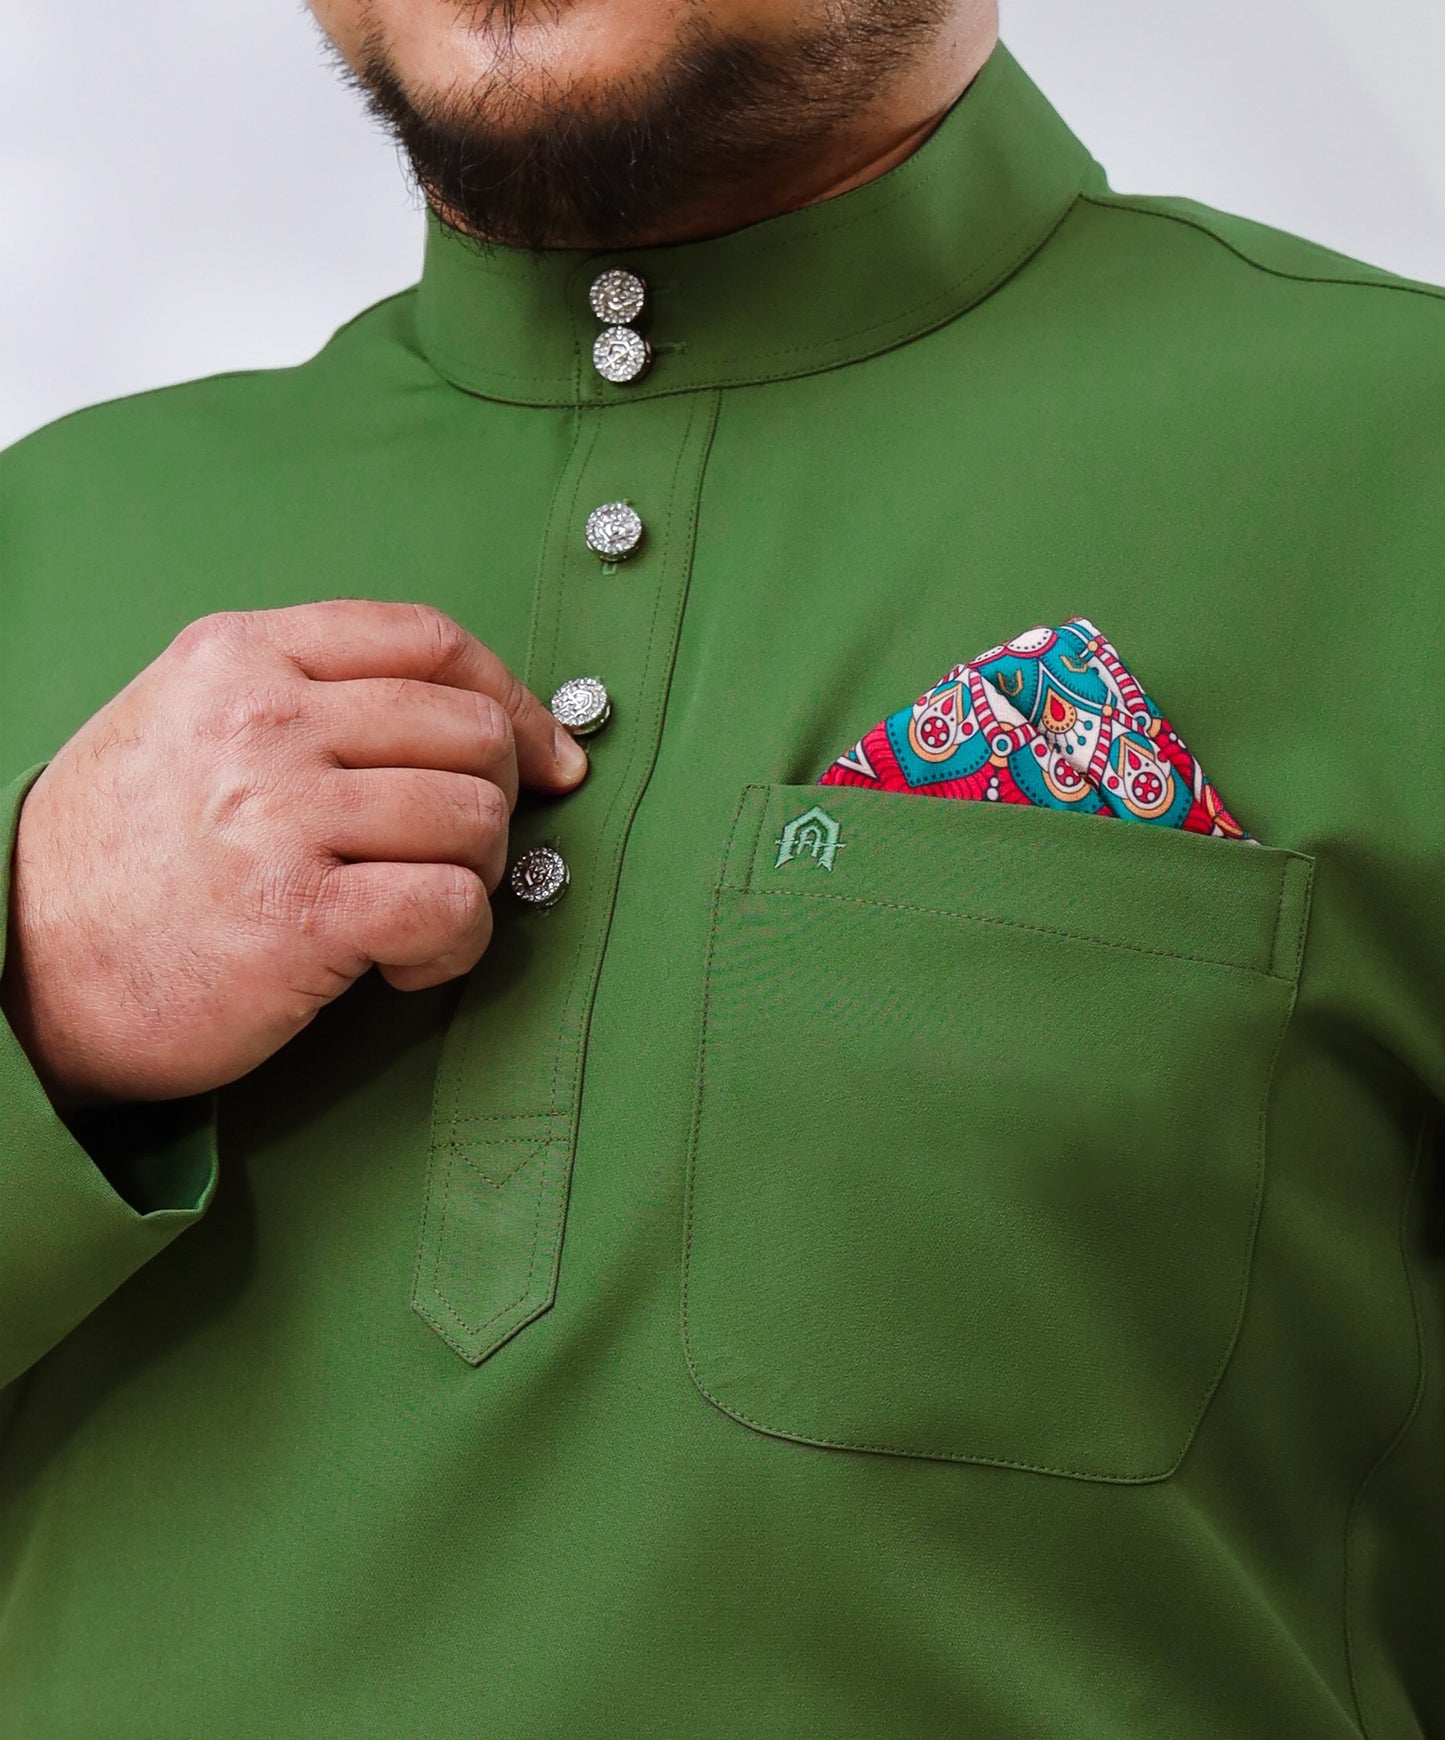 Baju Melayu Haseki - Fern Green